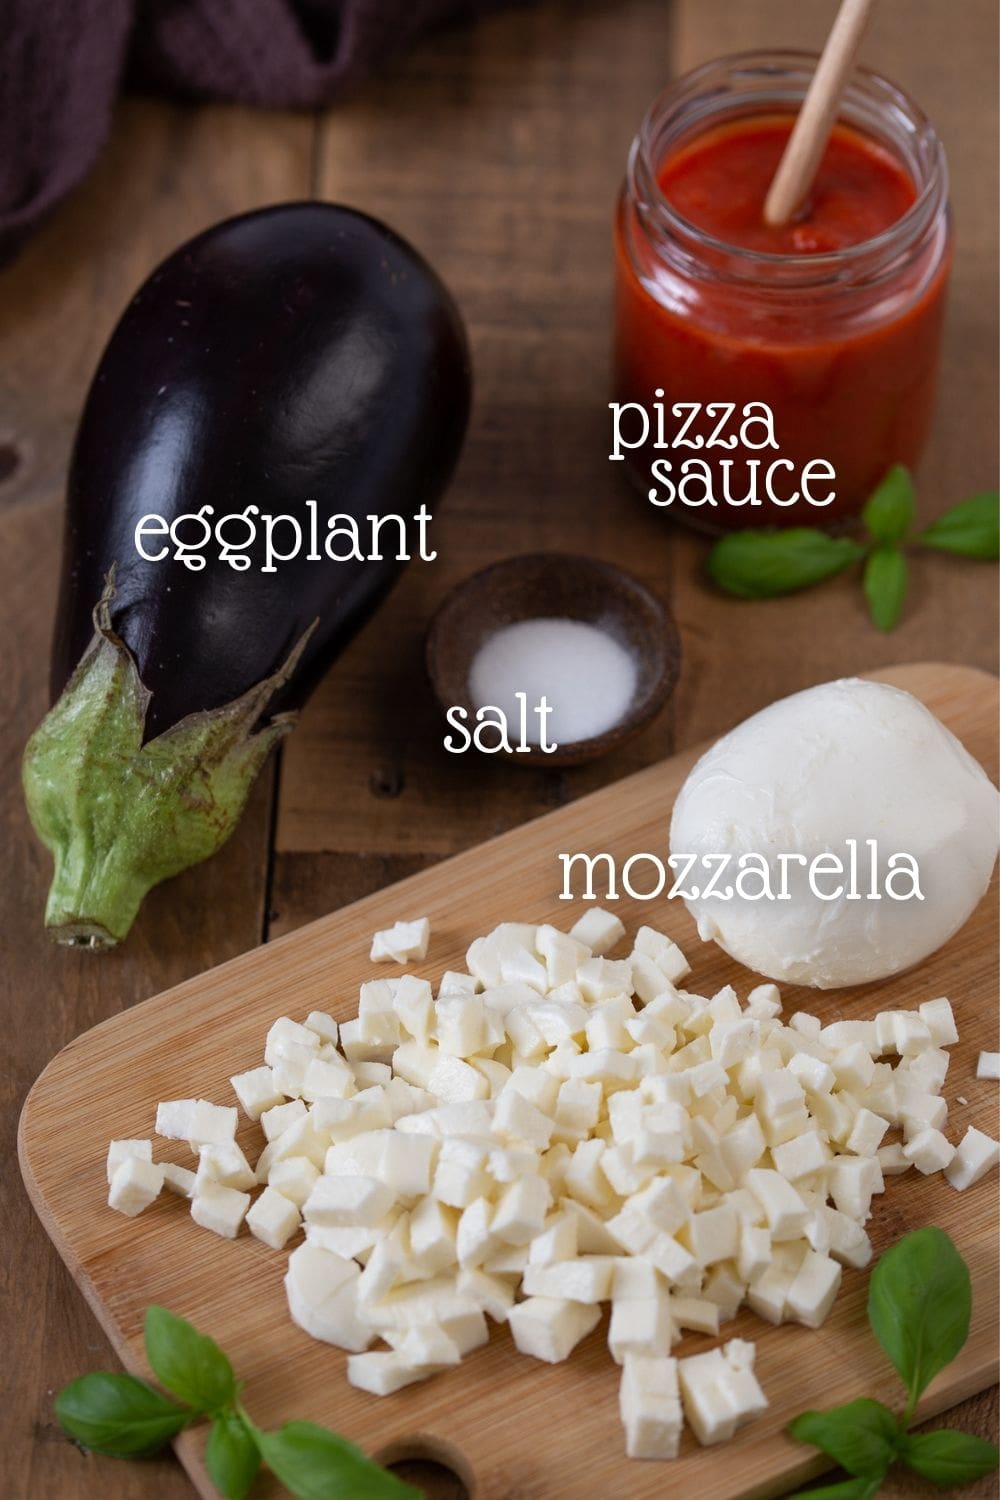 Eggplant pizzette ingredients.